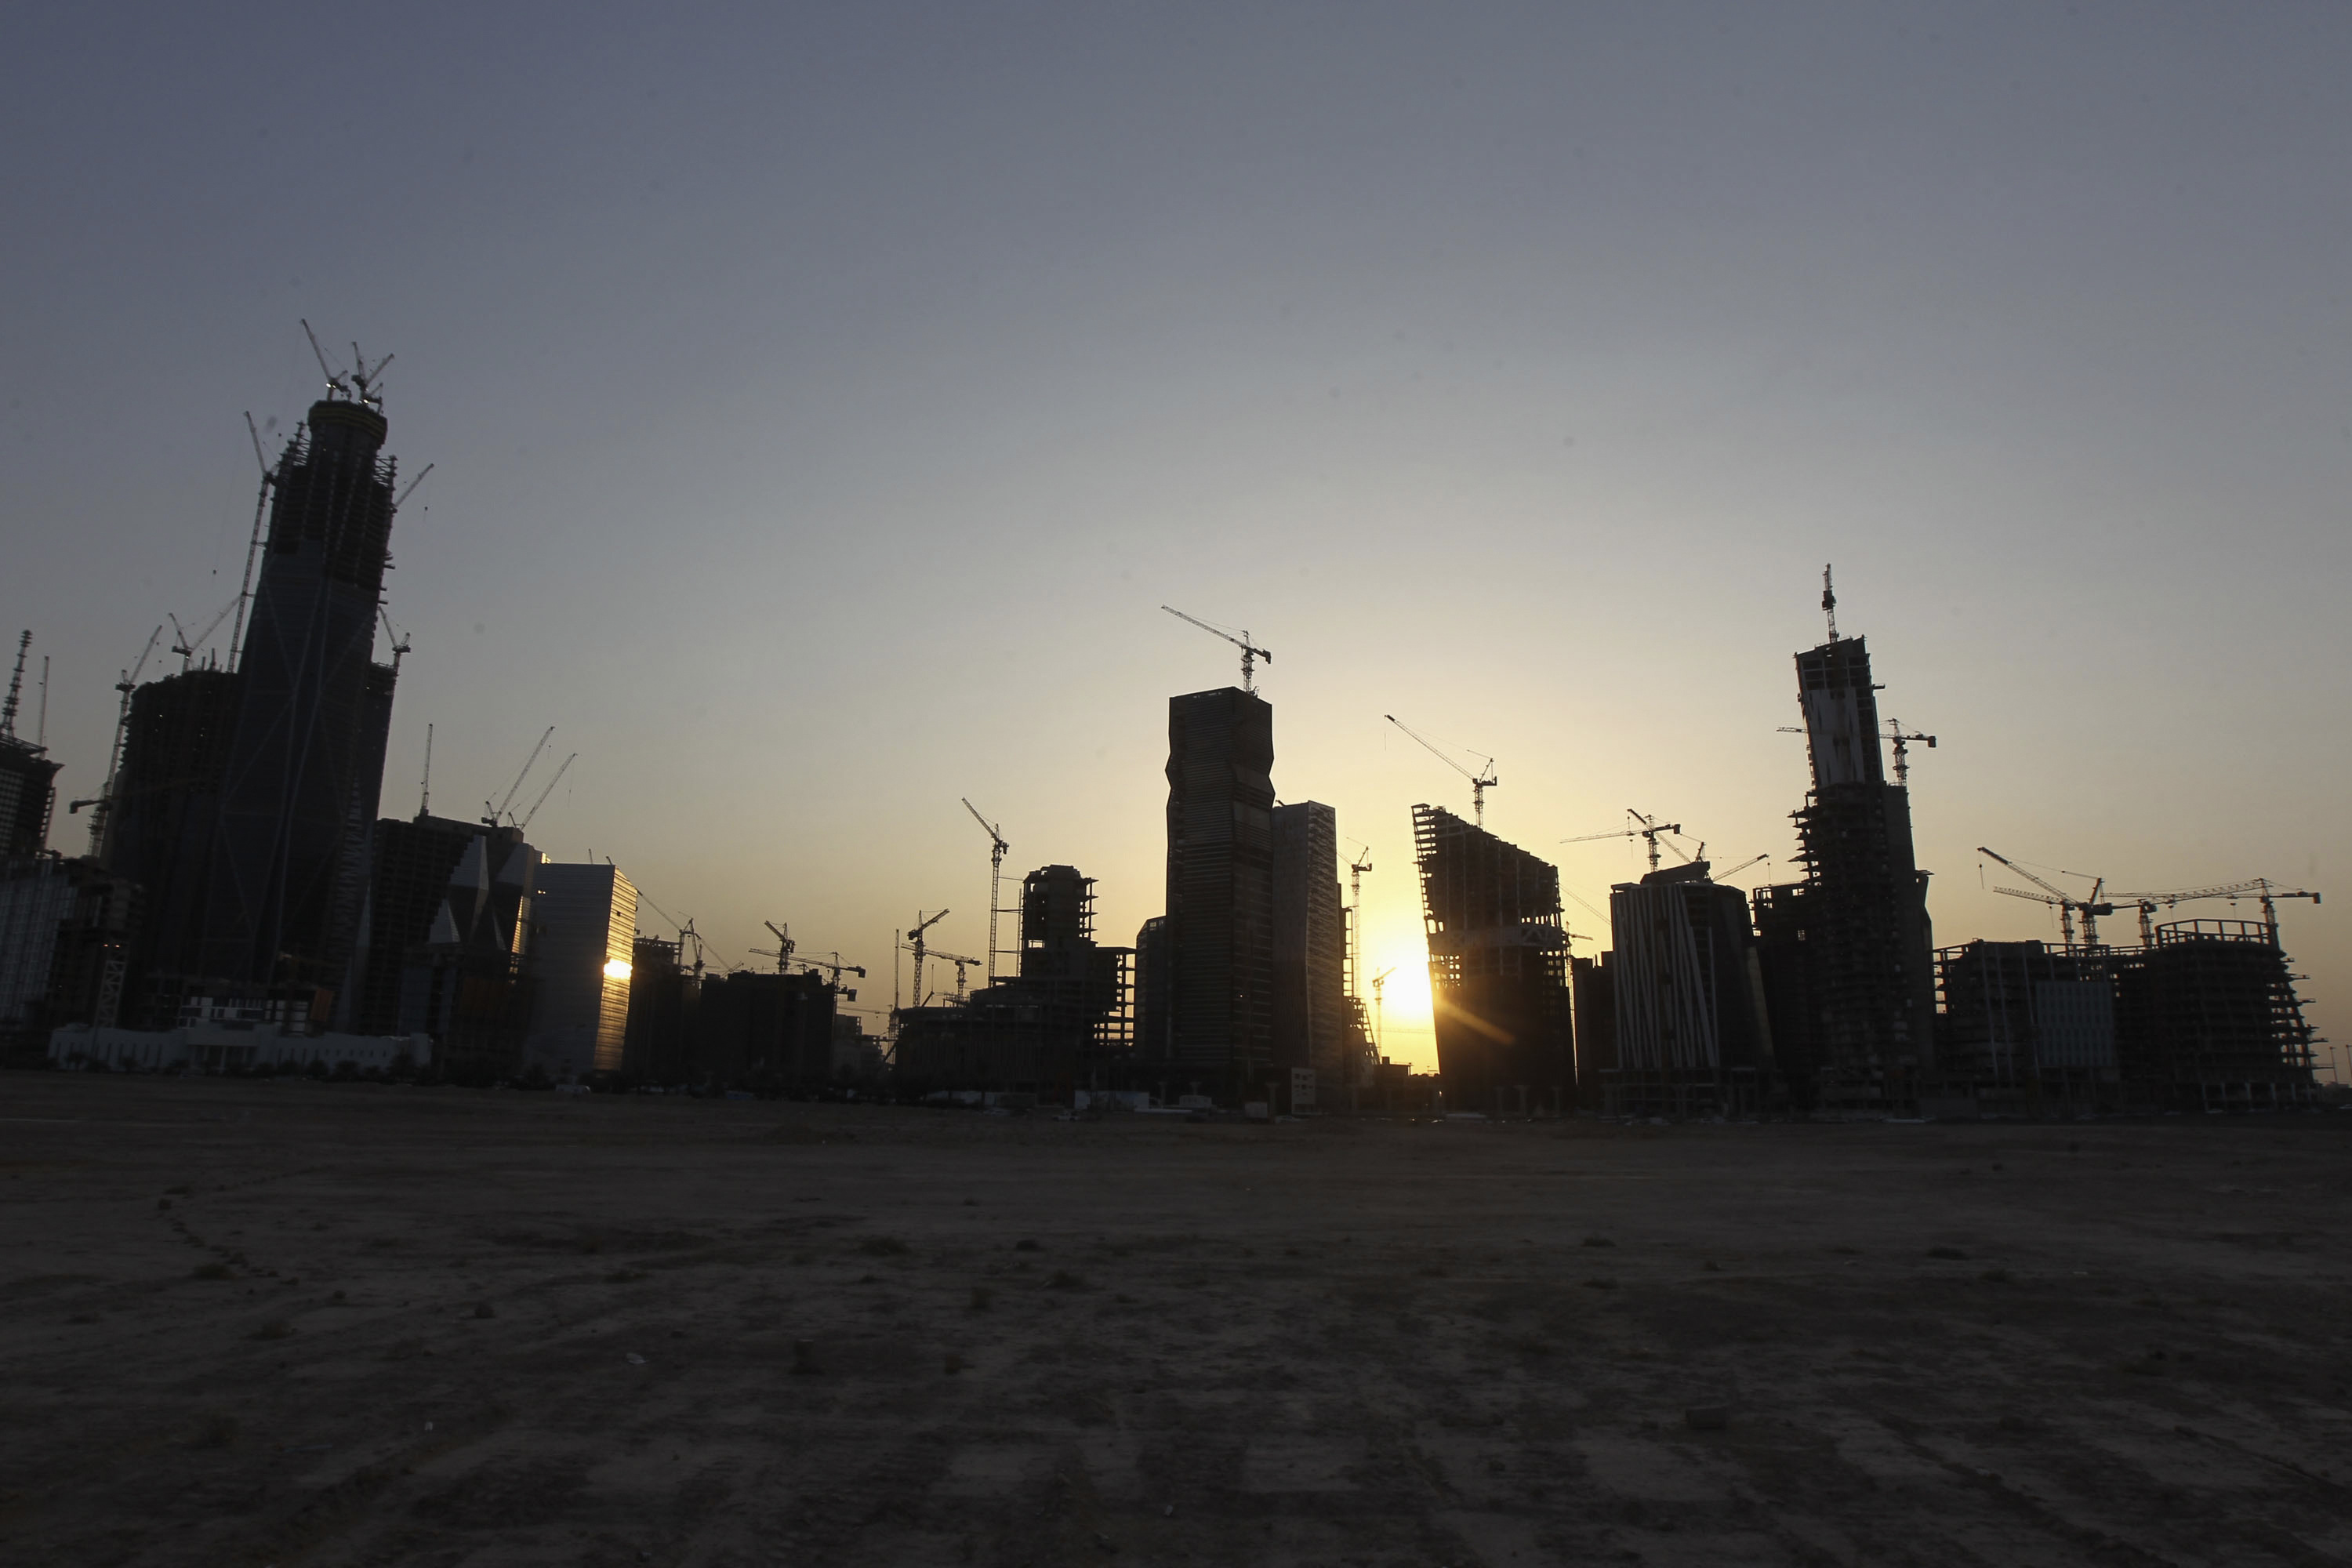 View of King Abdullah Financial District in the Saudi capital Riyadh at sun set